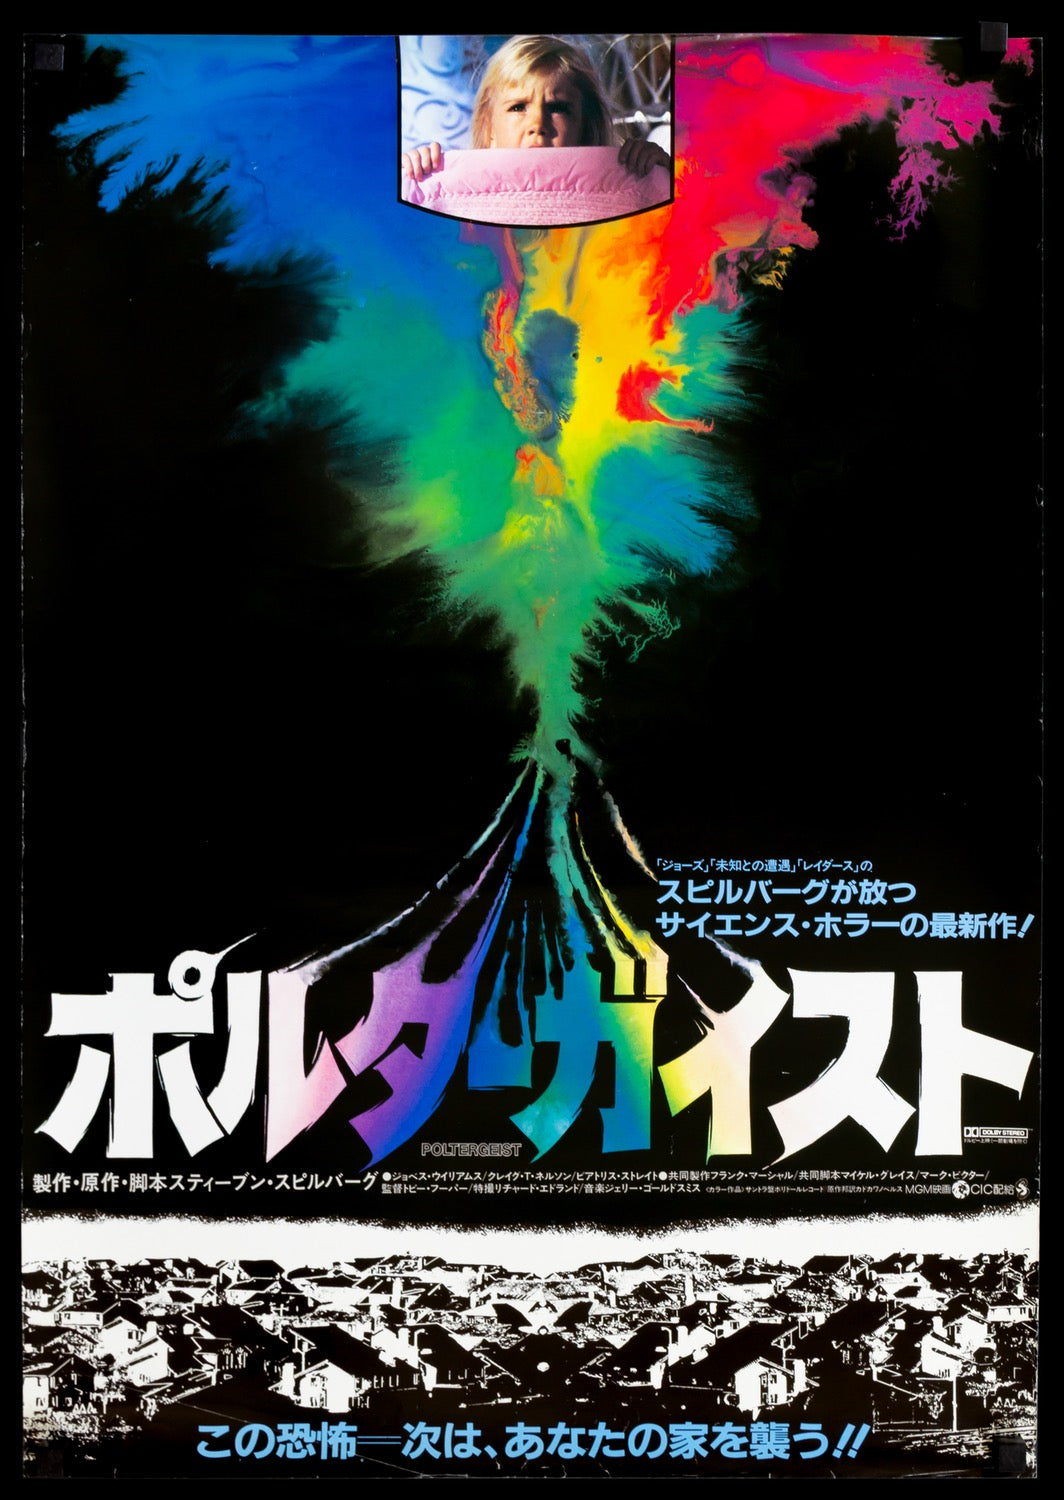 Poltergeist (1982) original movie poster for sale at Original Film Art